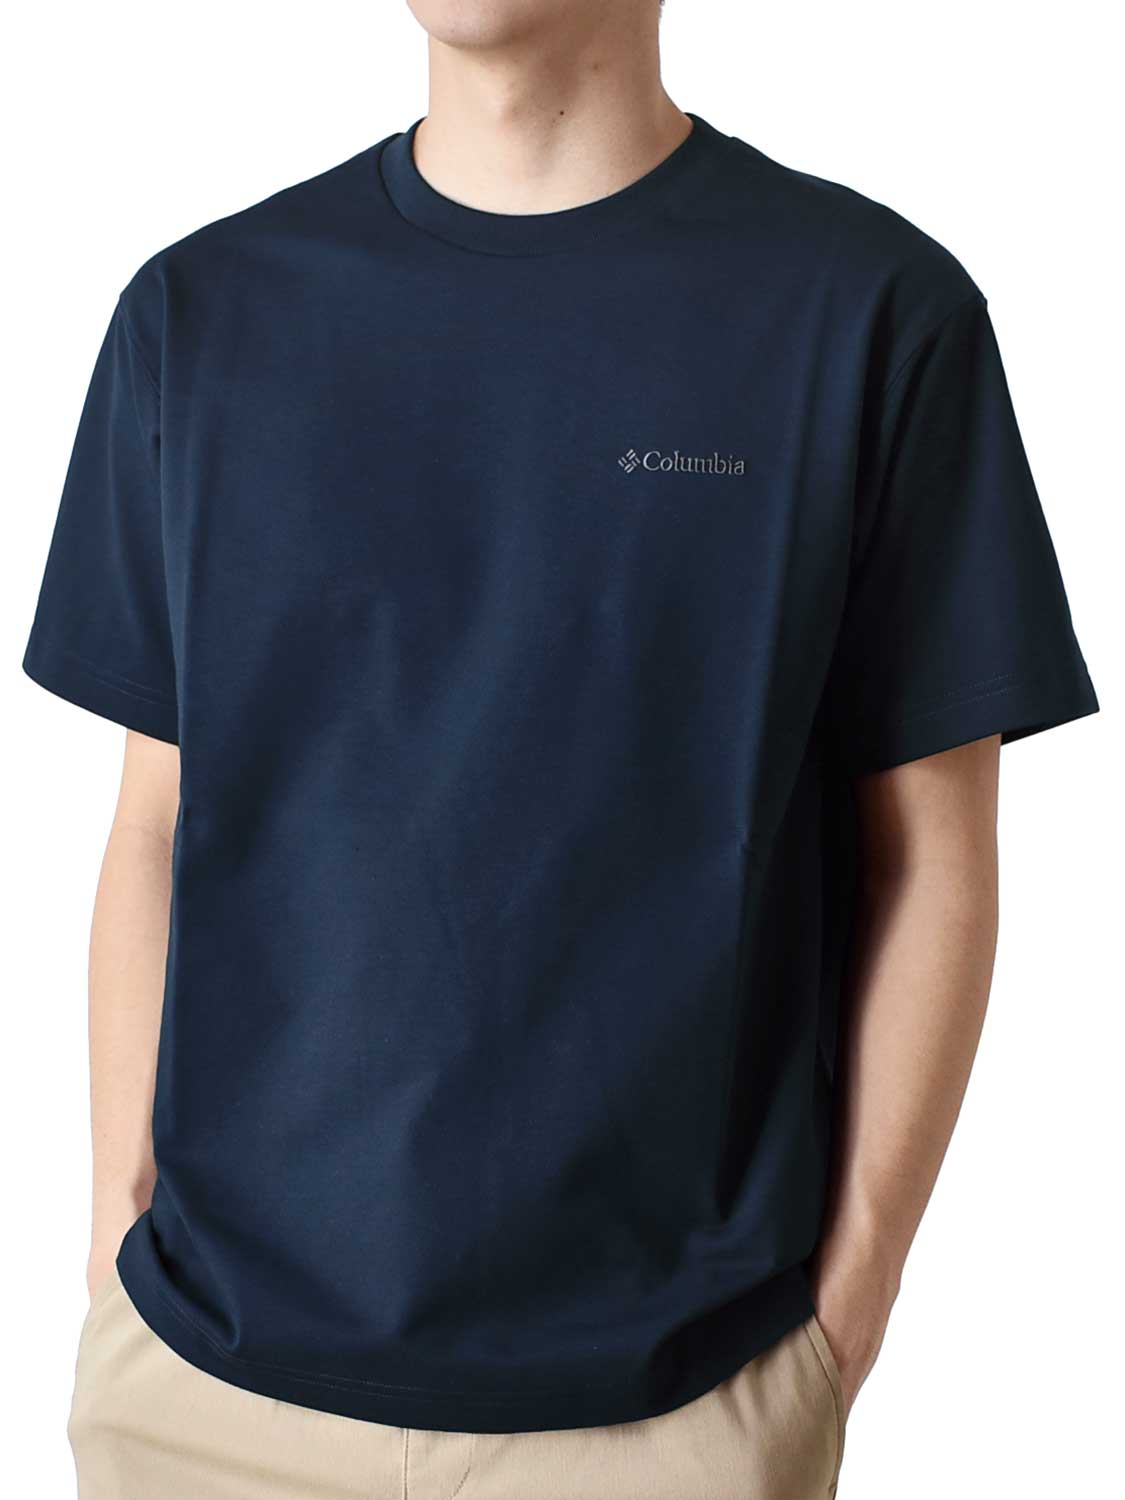 Columbia Tシャツ メンズ DRY 吸汗速乾 UVカット 送料無料 通販Y コロンビア 半袖